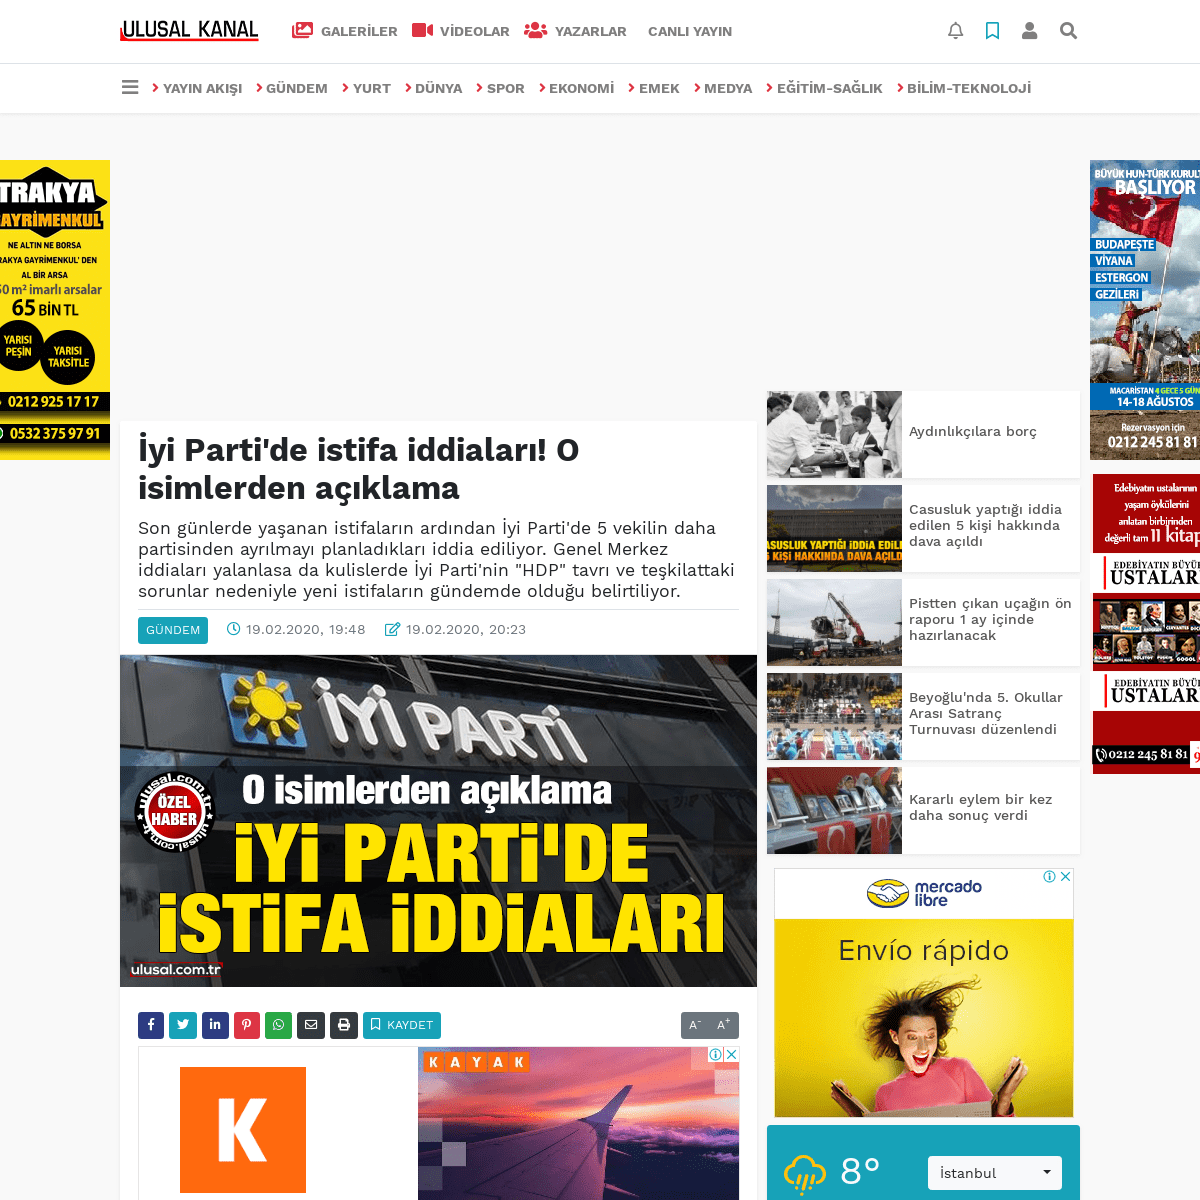 A complete backup of www.ulusal.com.tr/gundem/iyi-partide-istifa-iddialari-o-isimlerden-aciklama-h251723.html